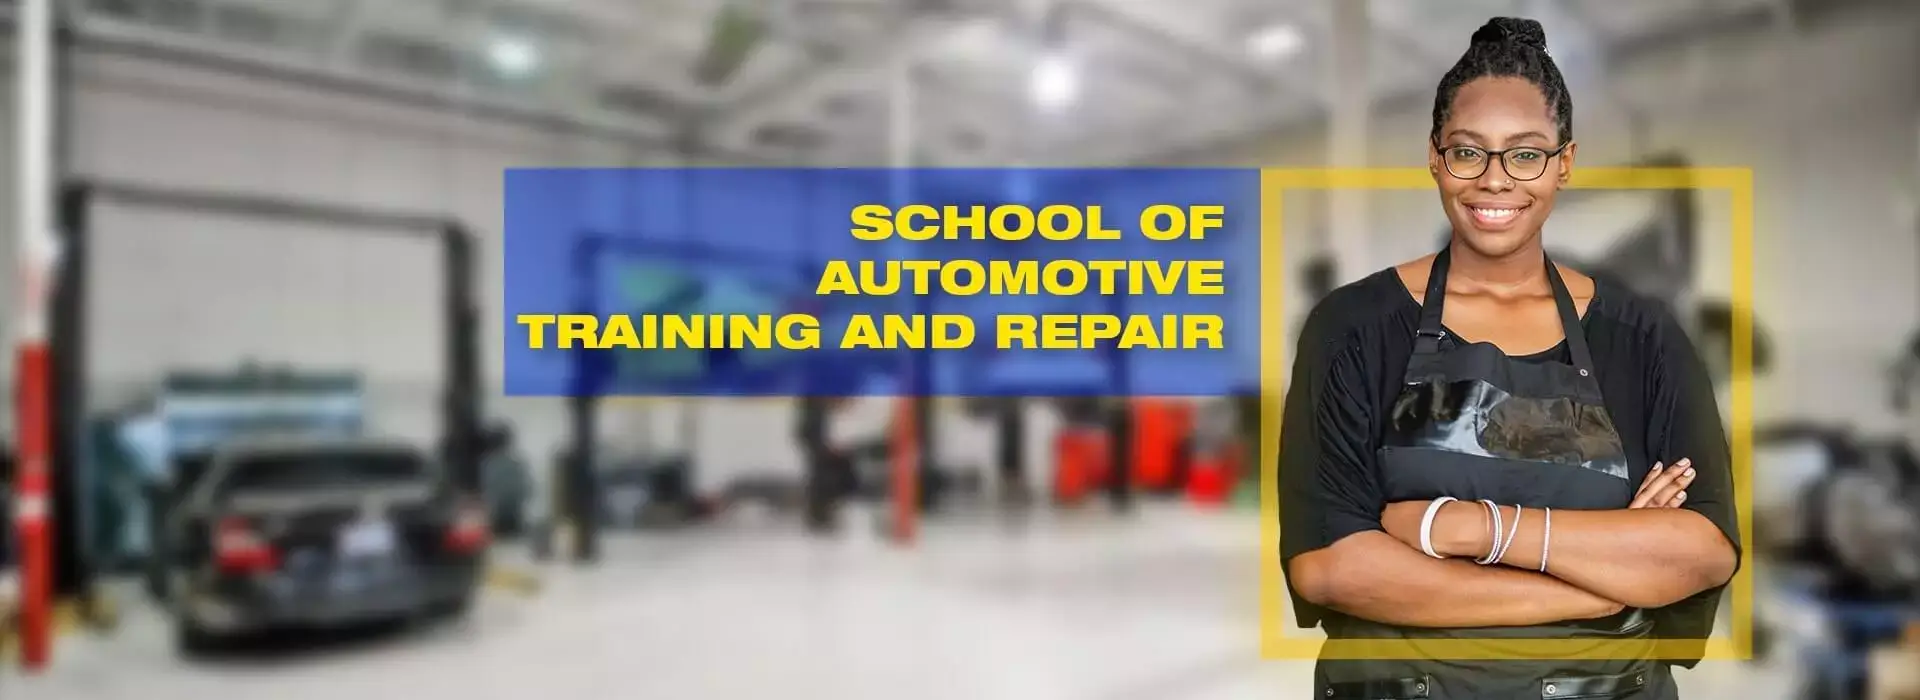 Automotive Repair Program Slide